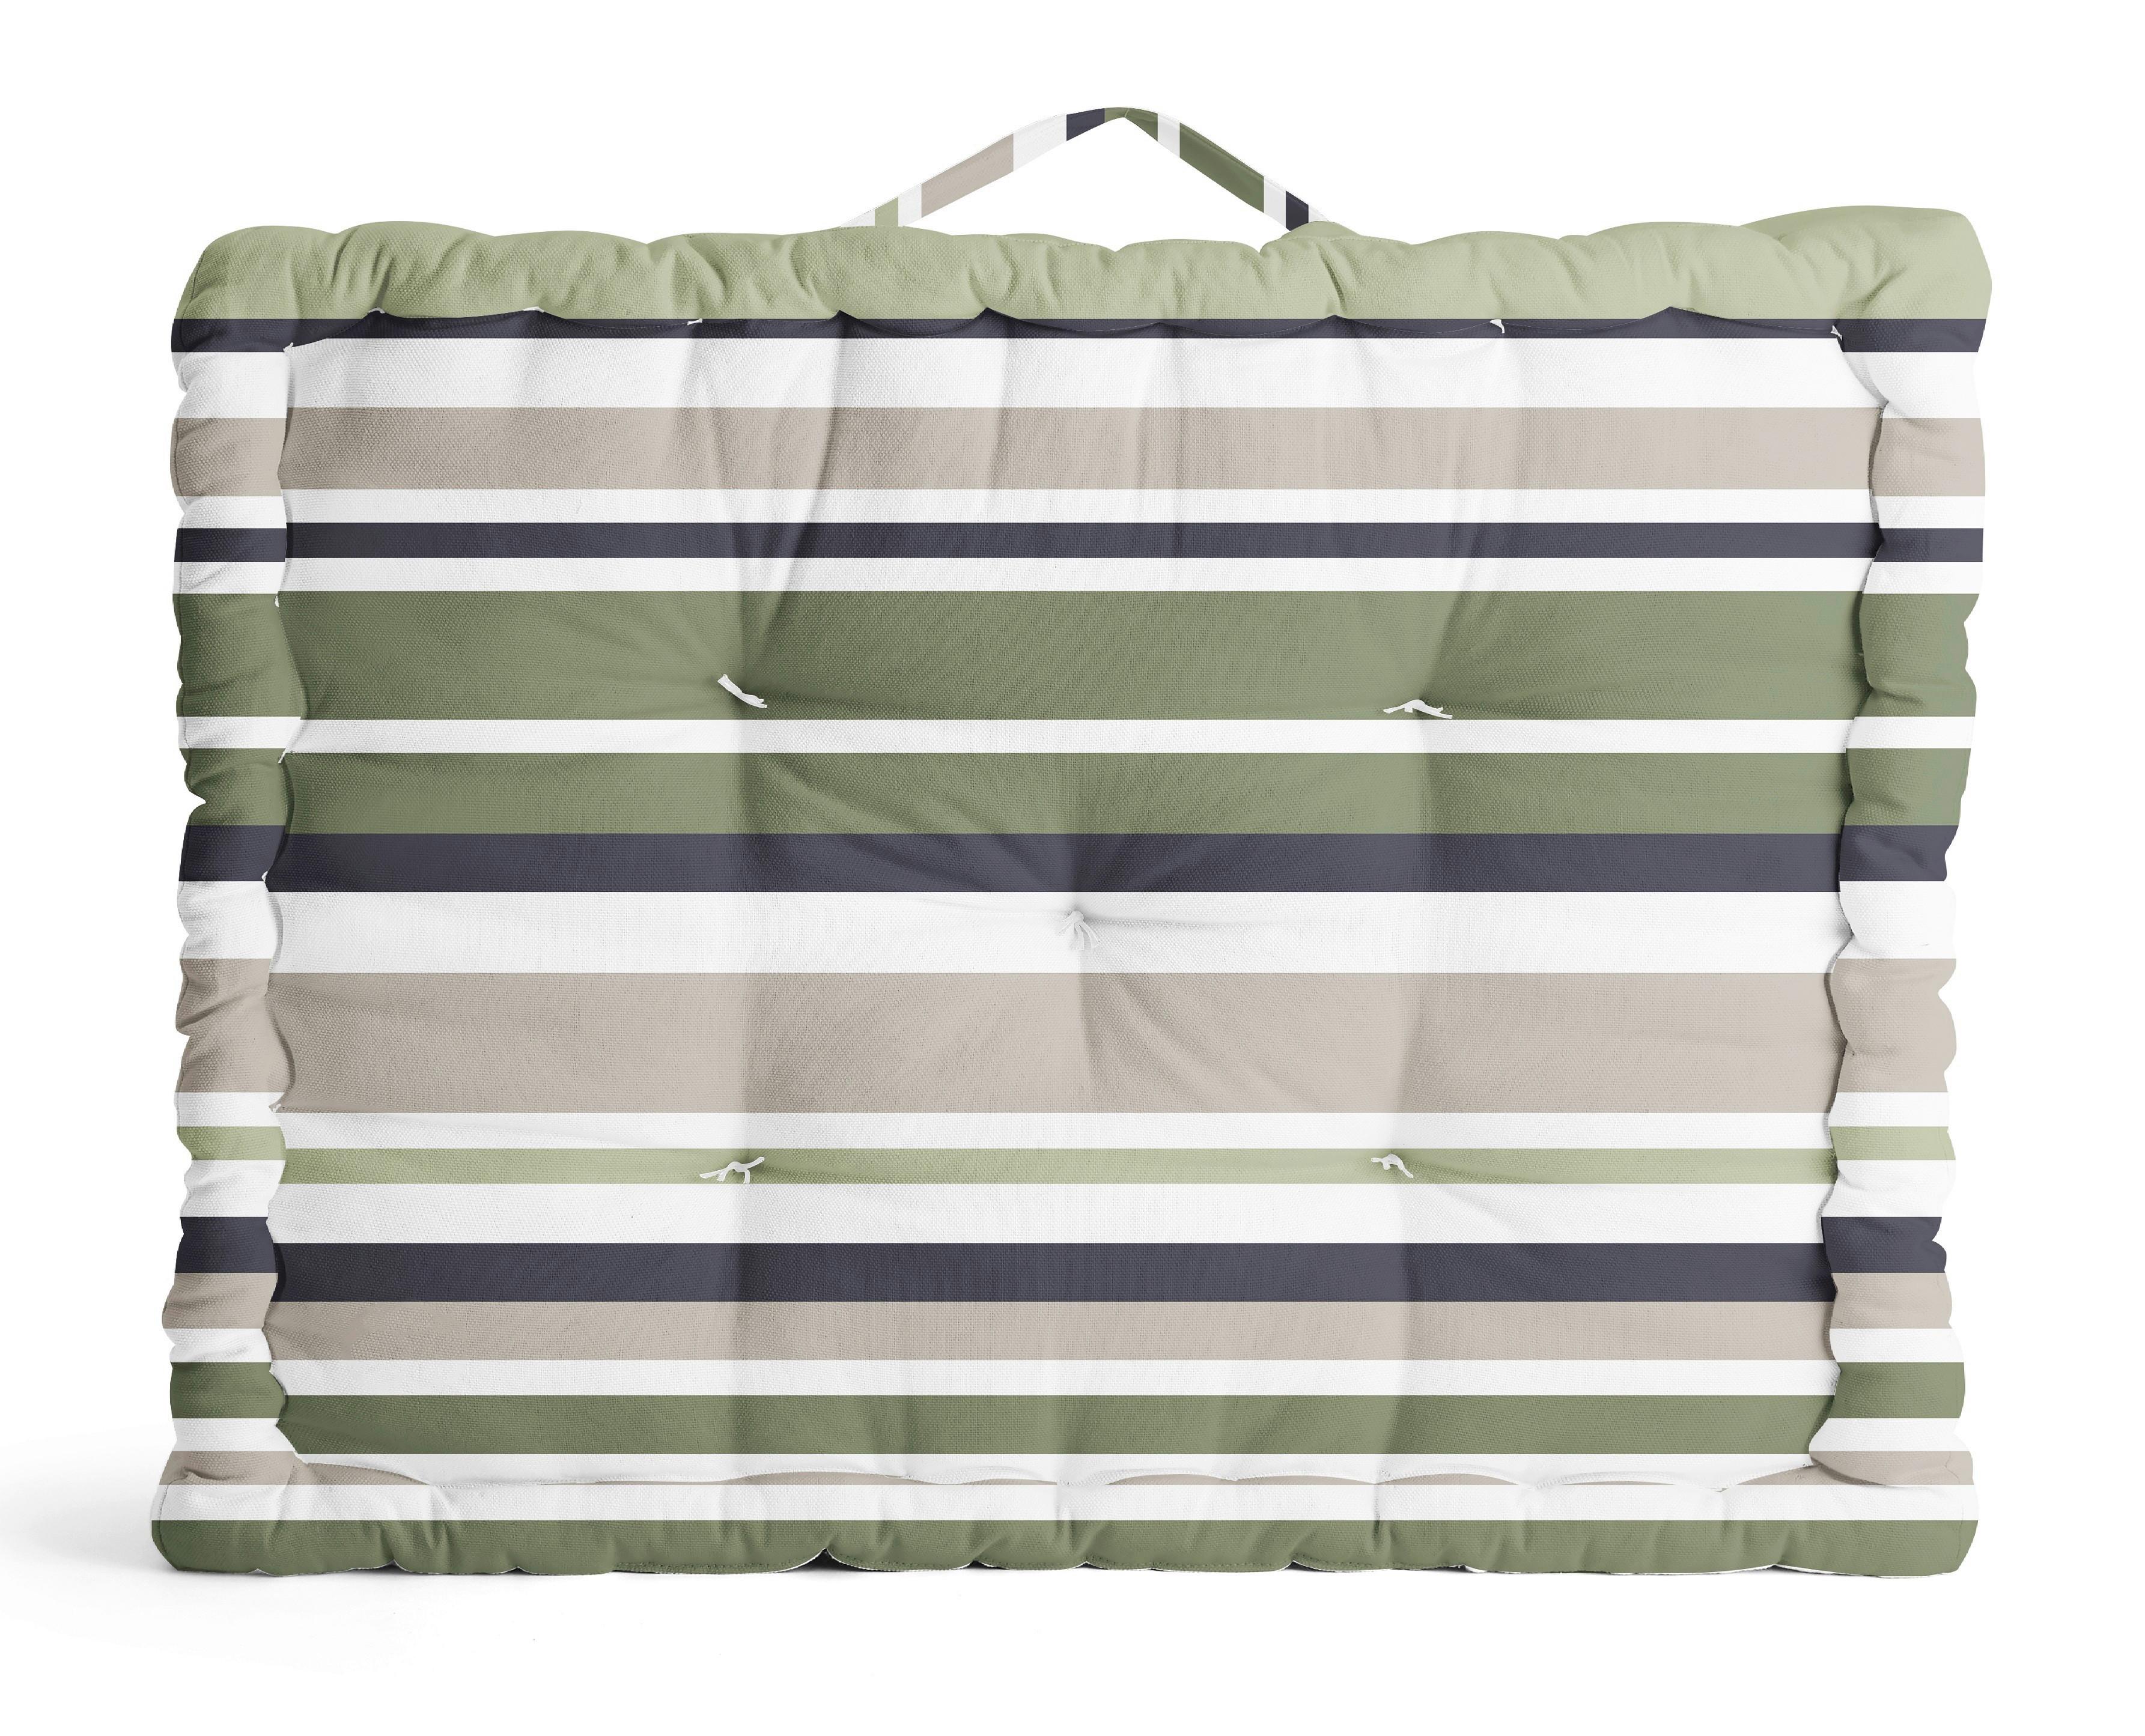 Poduška Na Paletu Chris, 60/80/12cm - vícebarevná, Konvenční, textil (60/80/12cm) - Modern Living